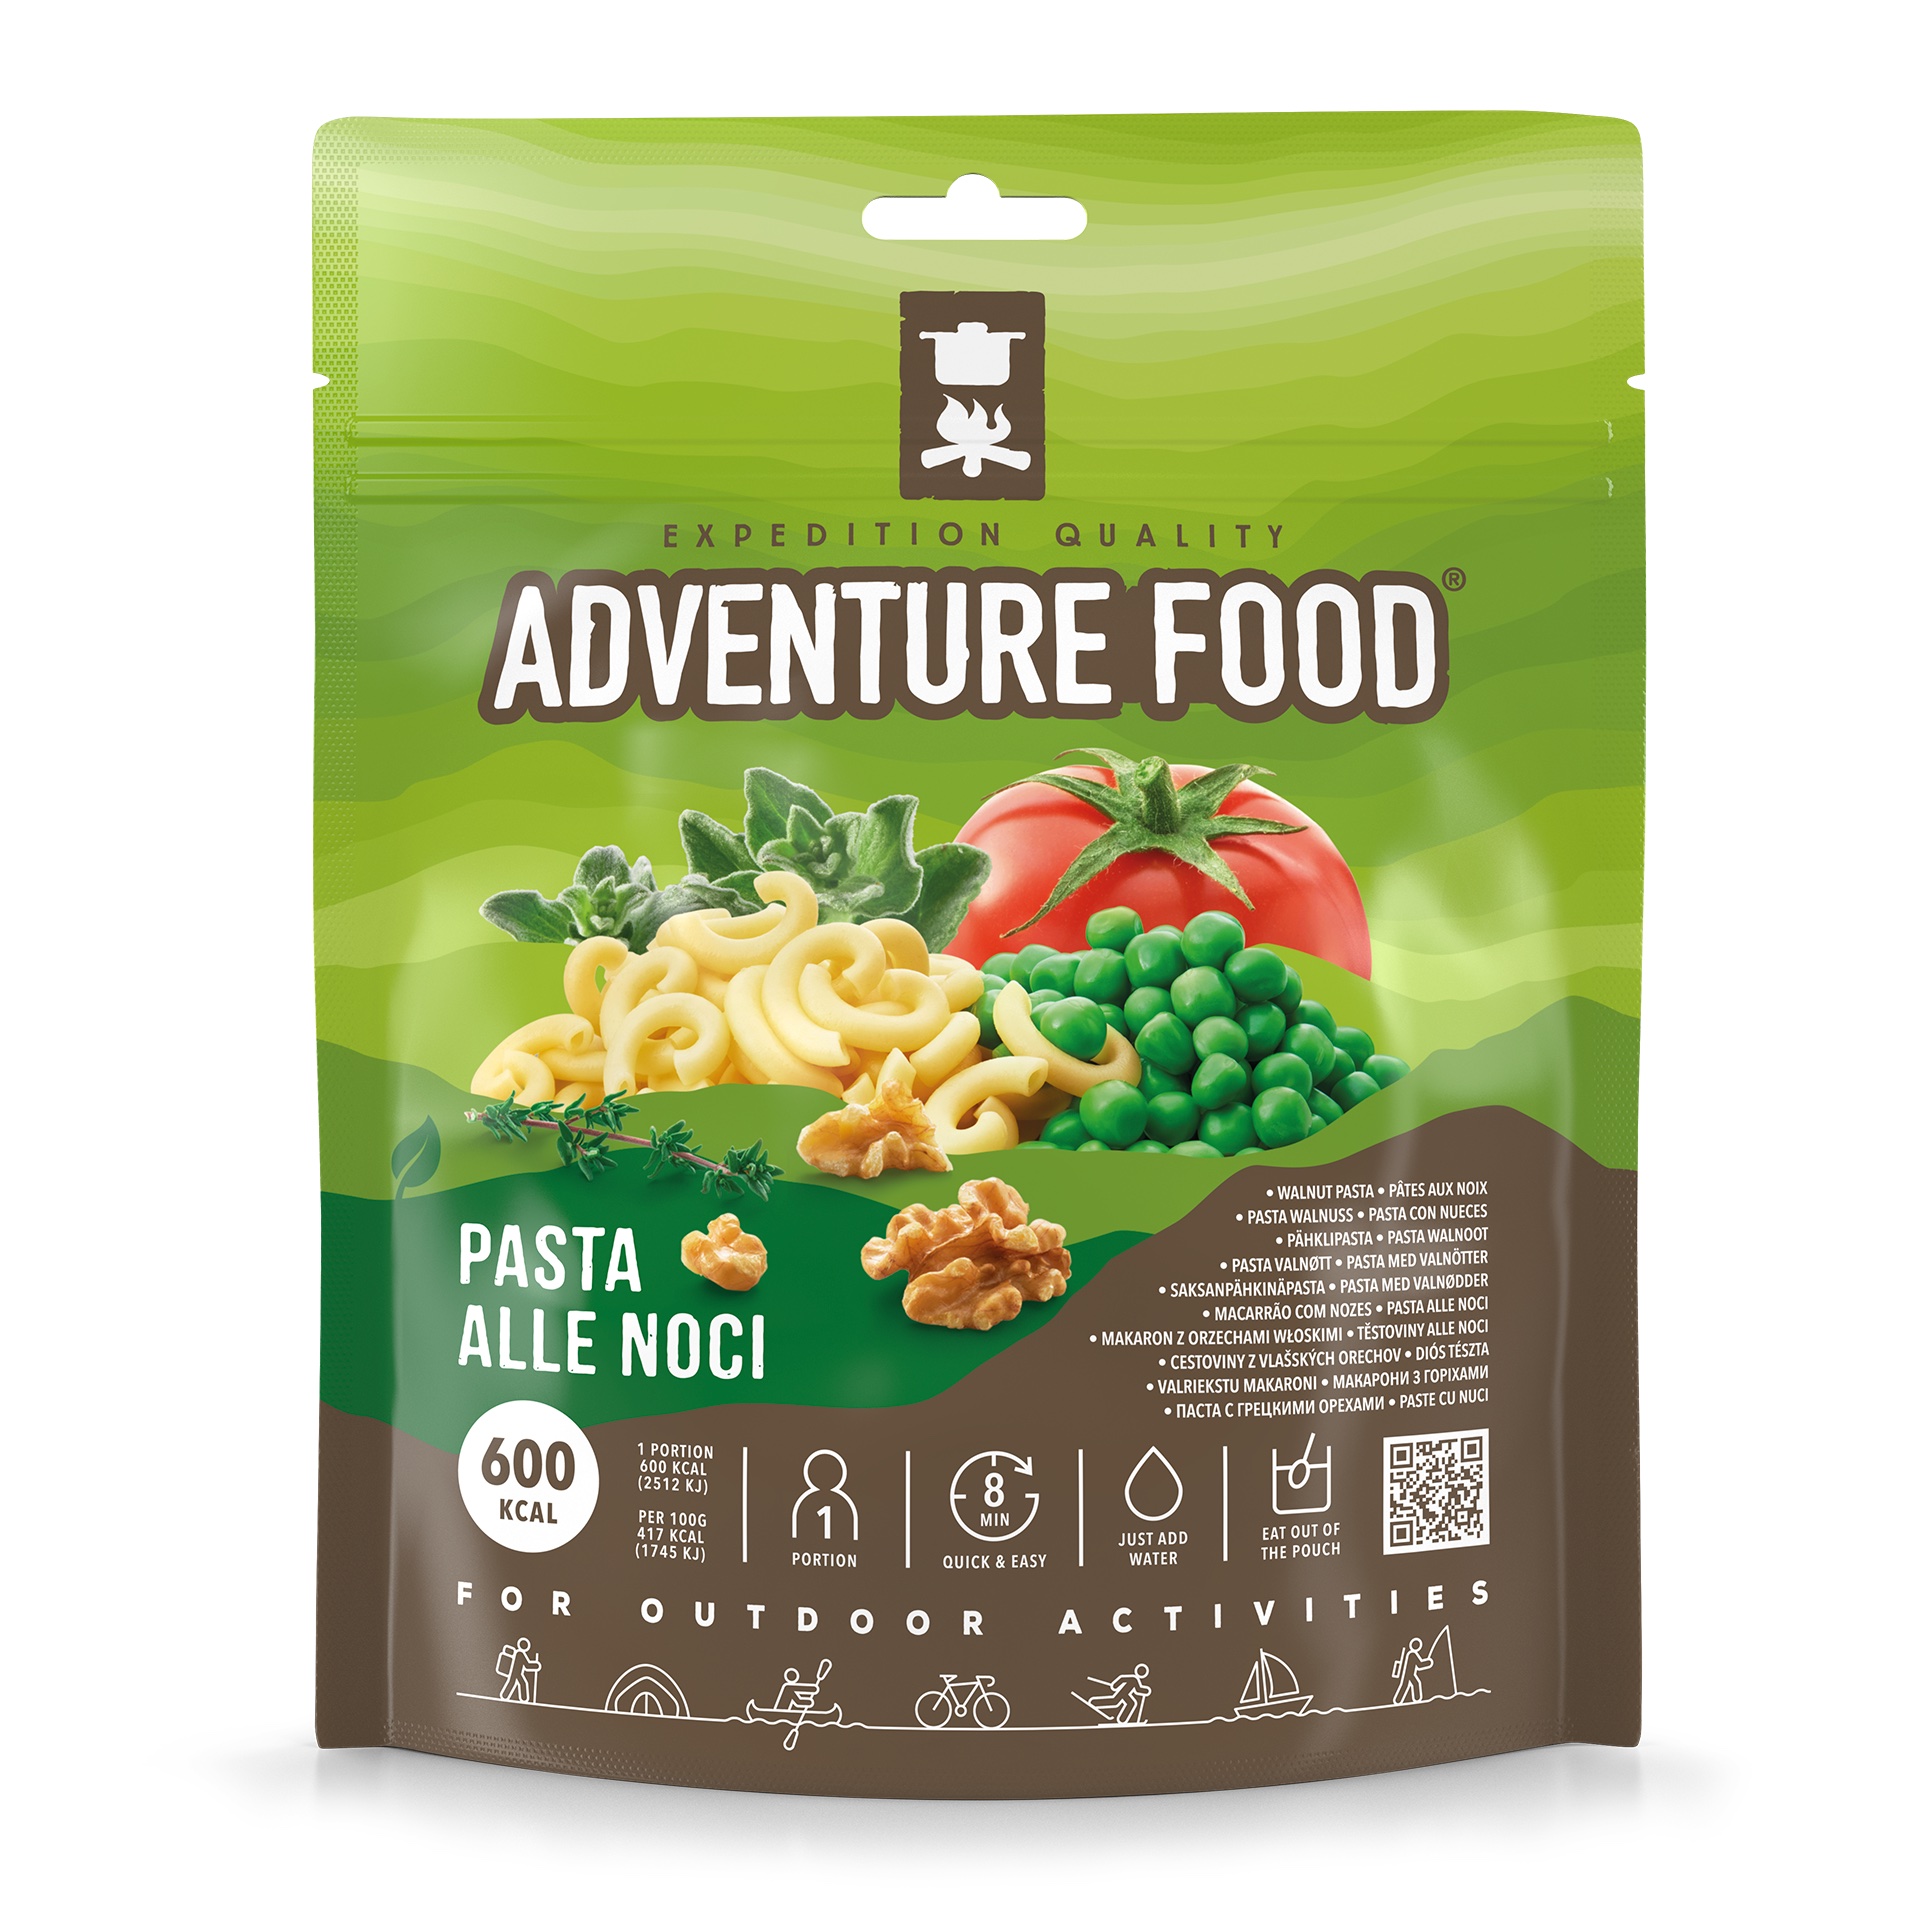 Adventure Food Pasta alle Noci (18-pack)